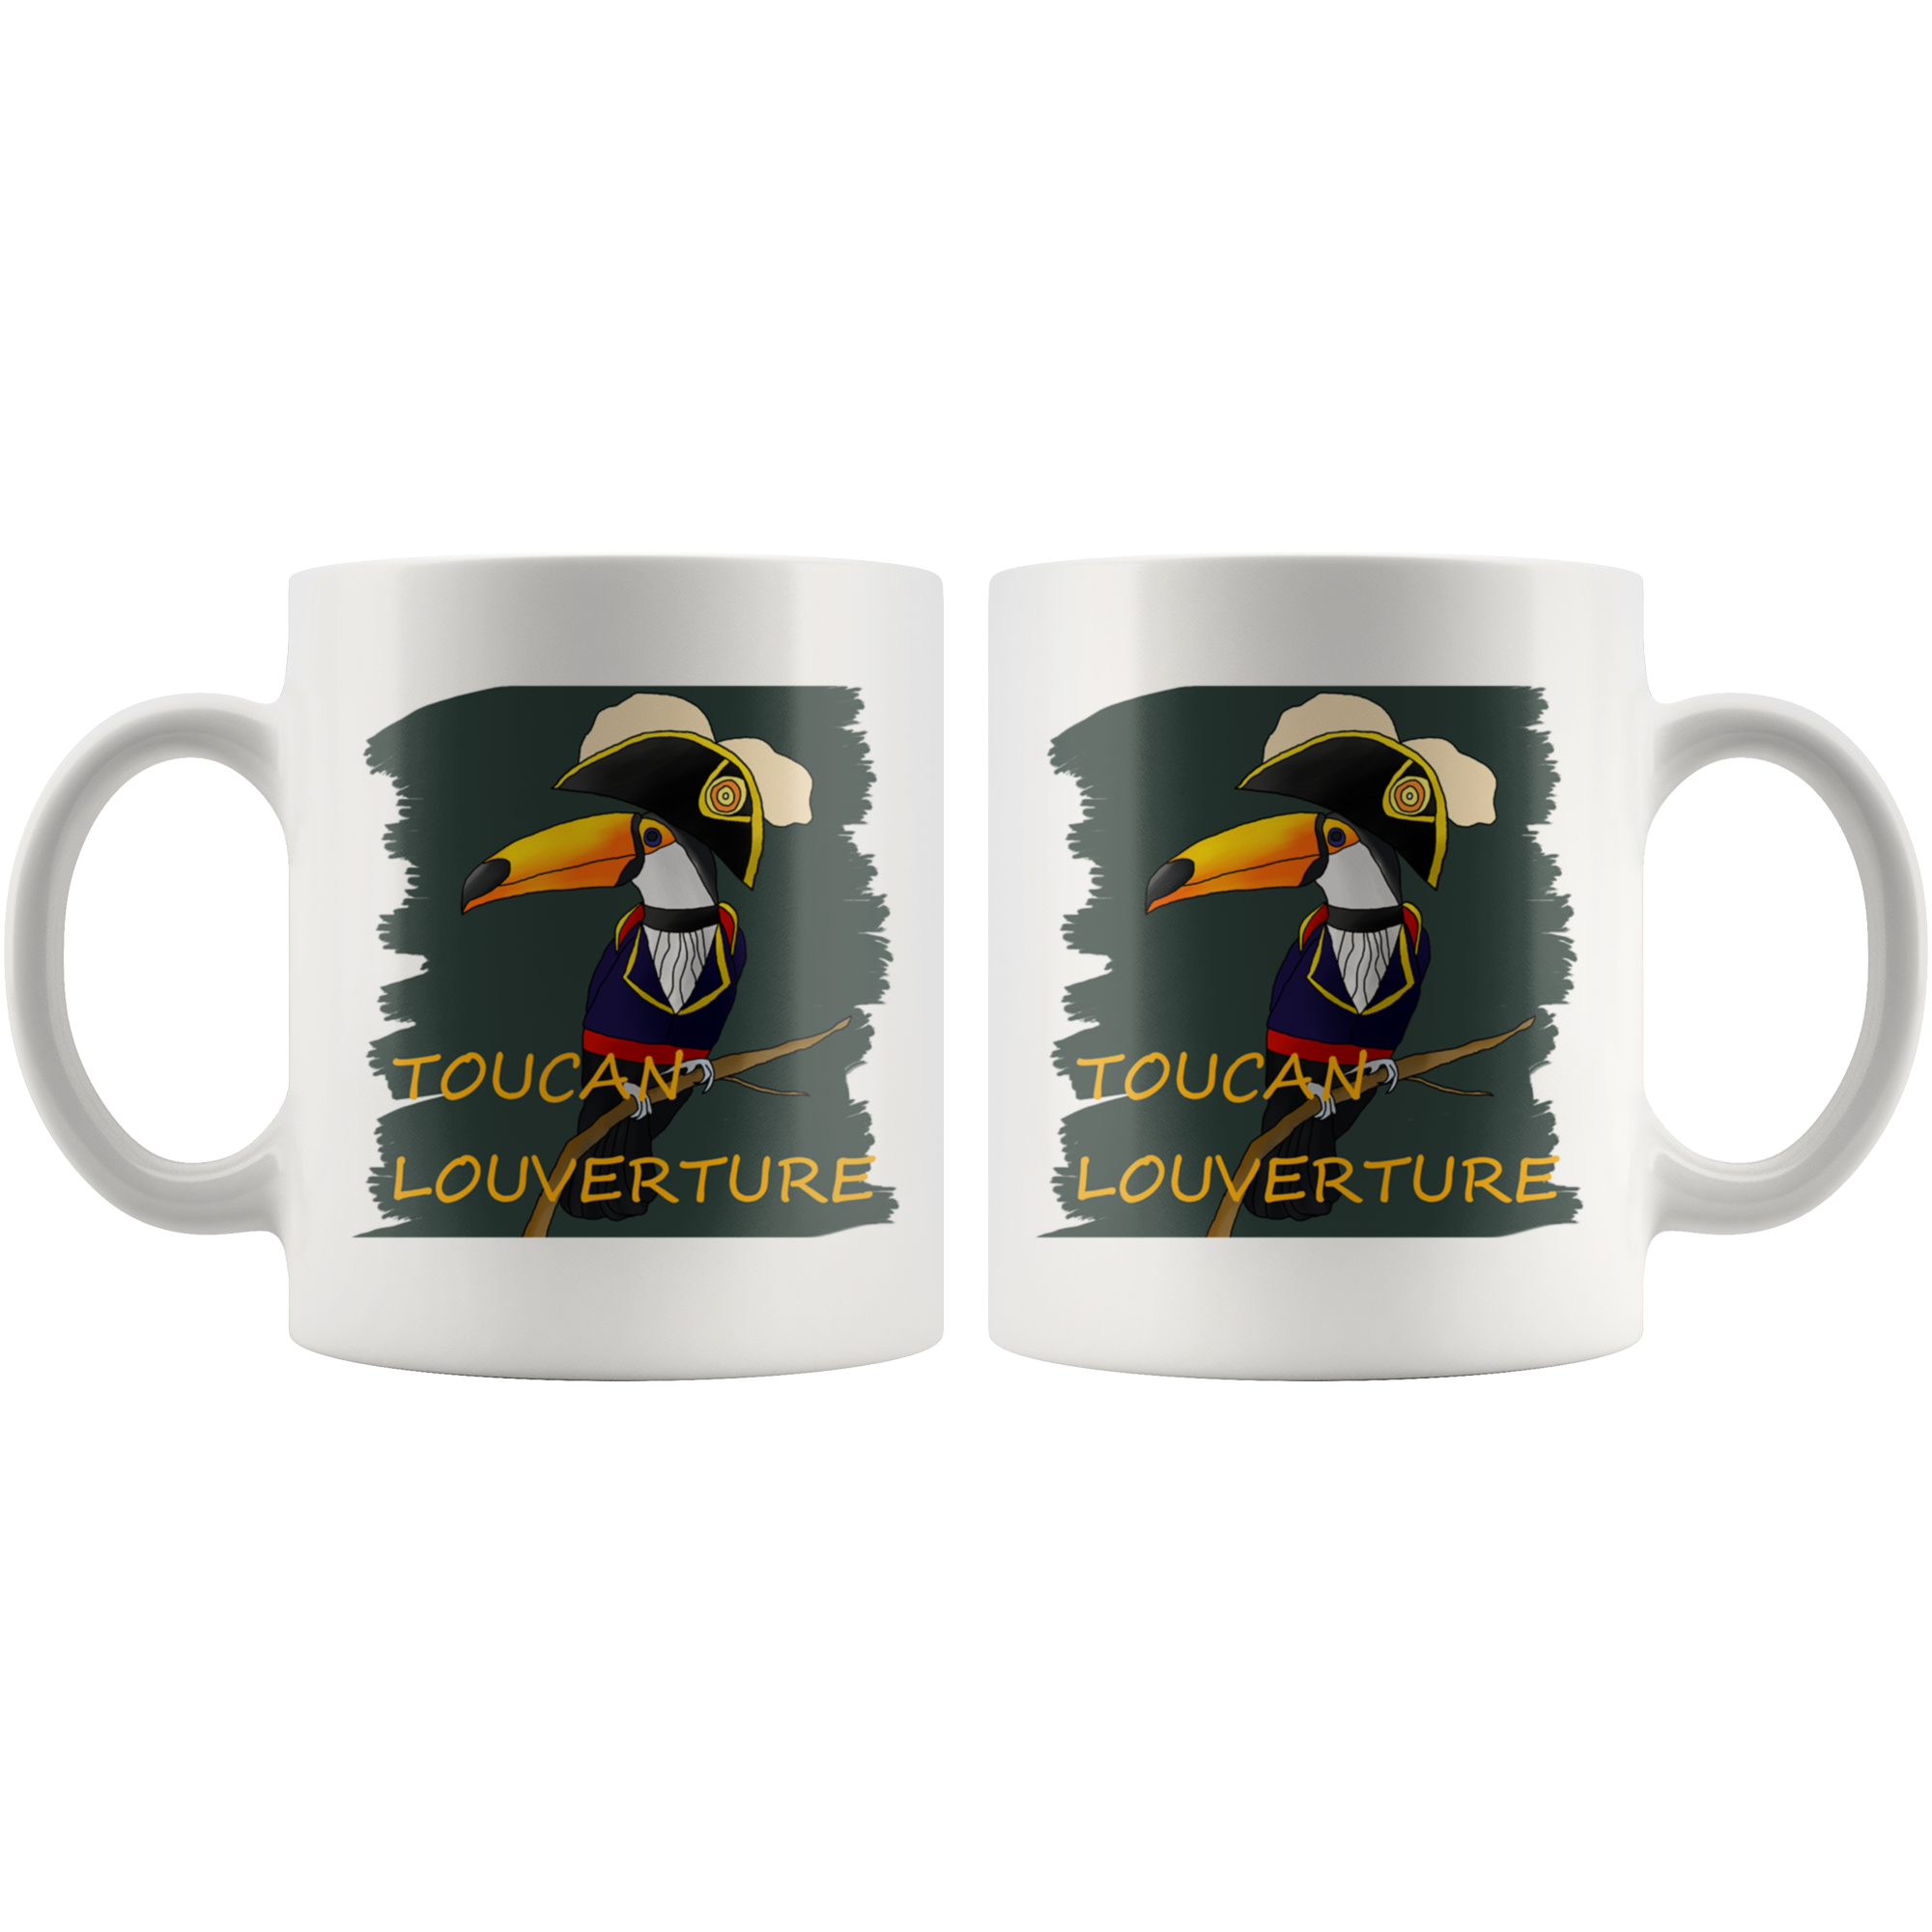 Toucan Louverture Mug - Napoleonic Impressions